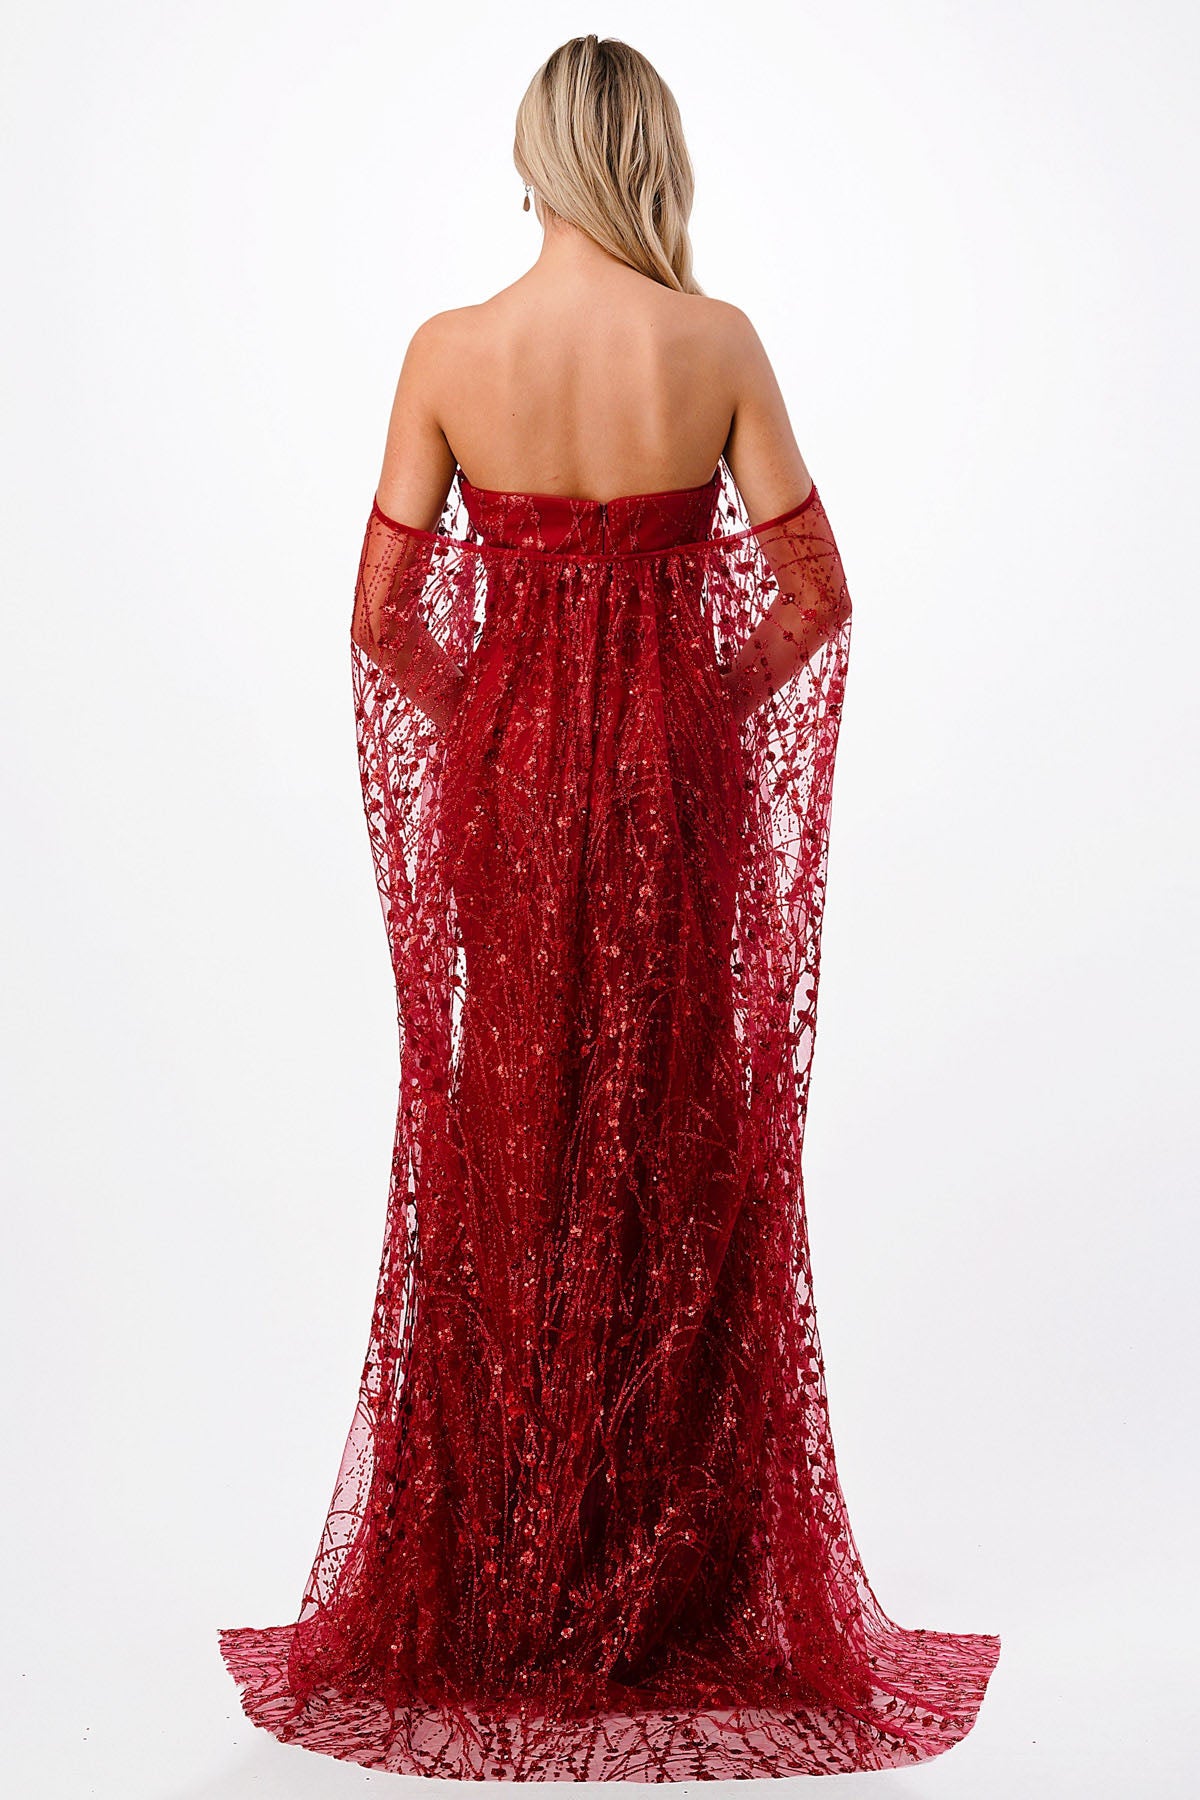 Aspeed Design -P2300 Off Shoulder Mermaid Dress